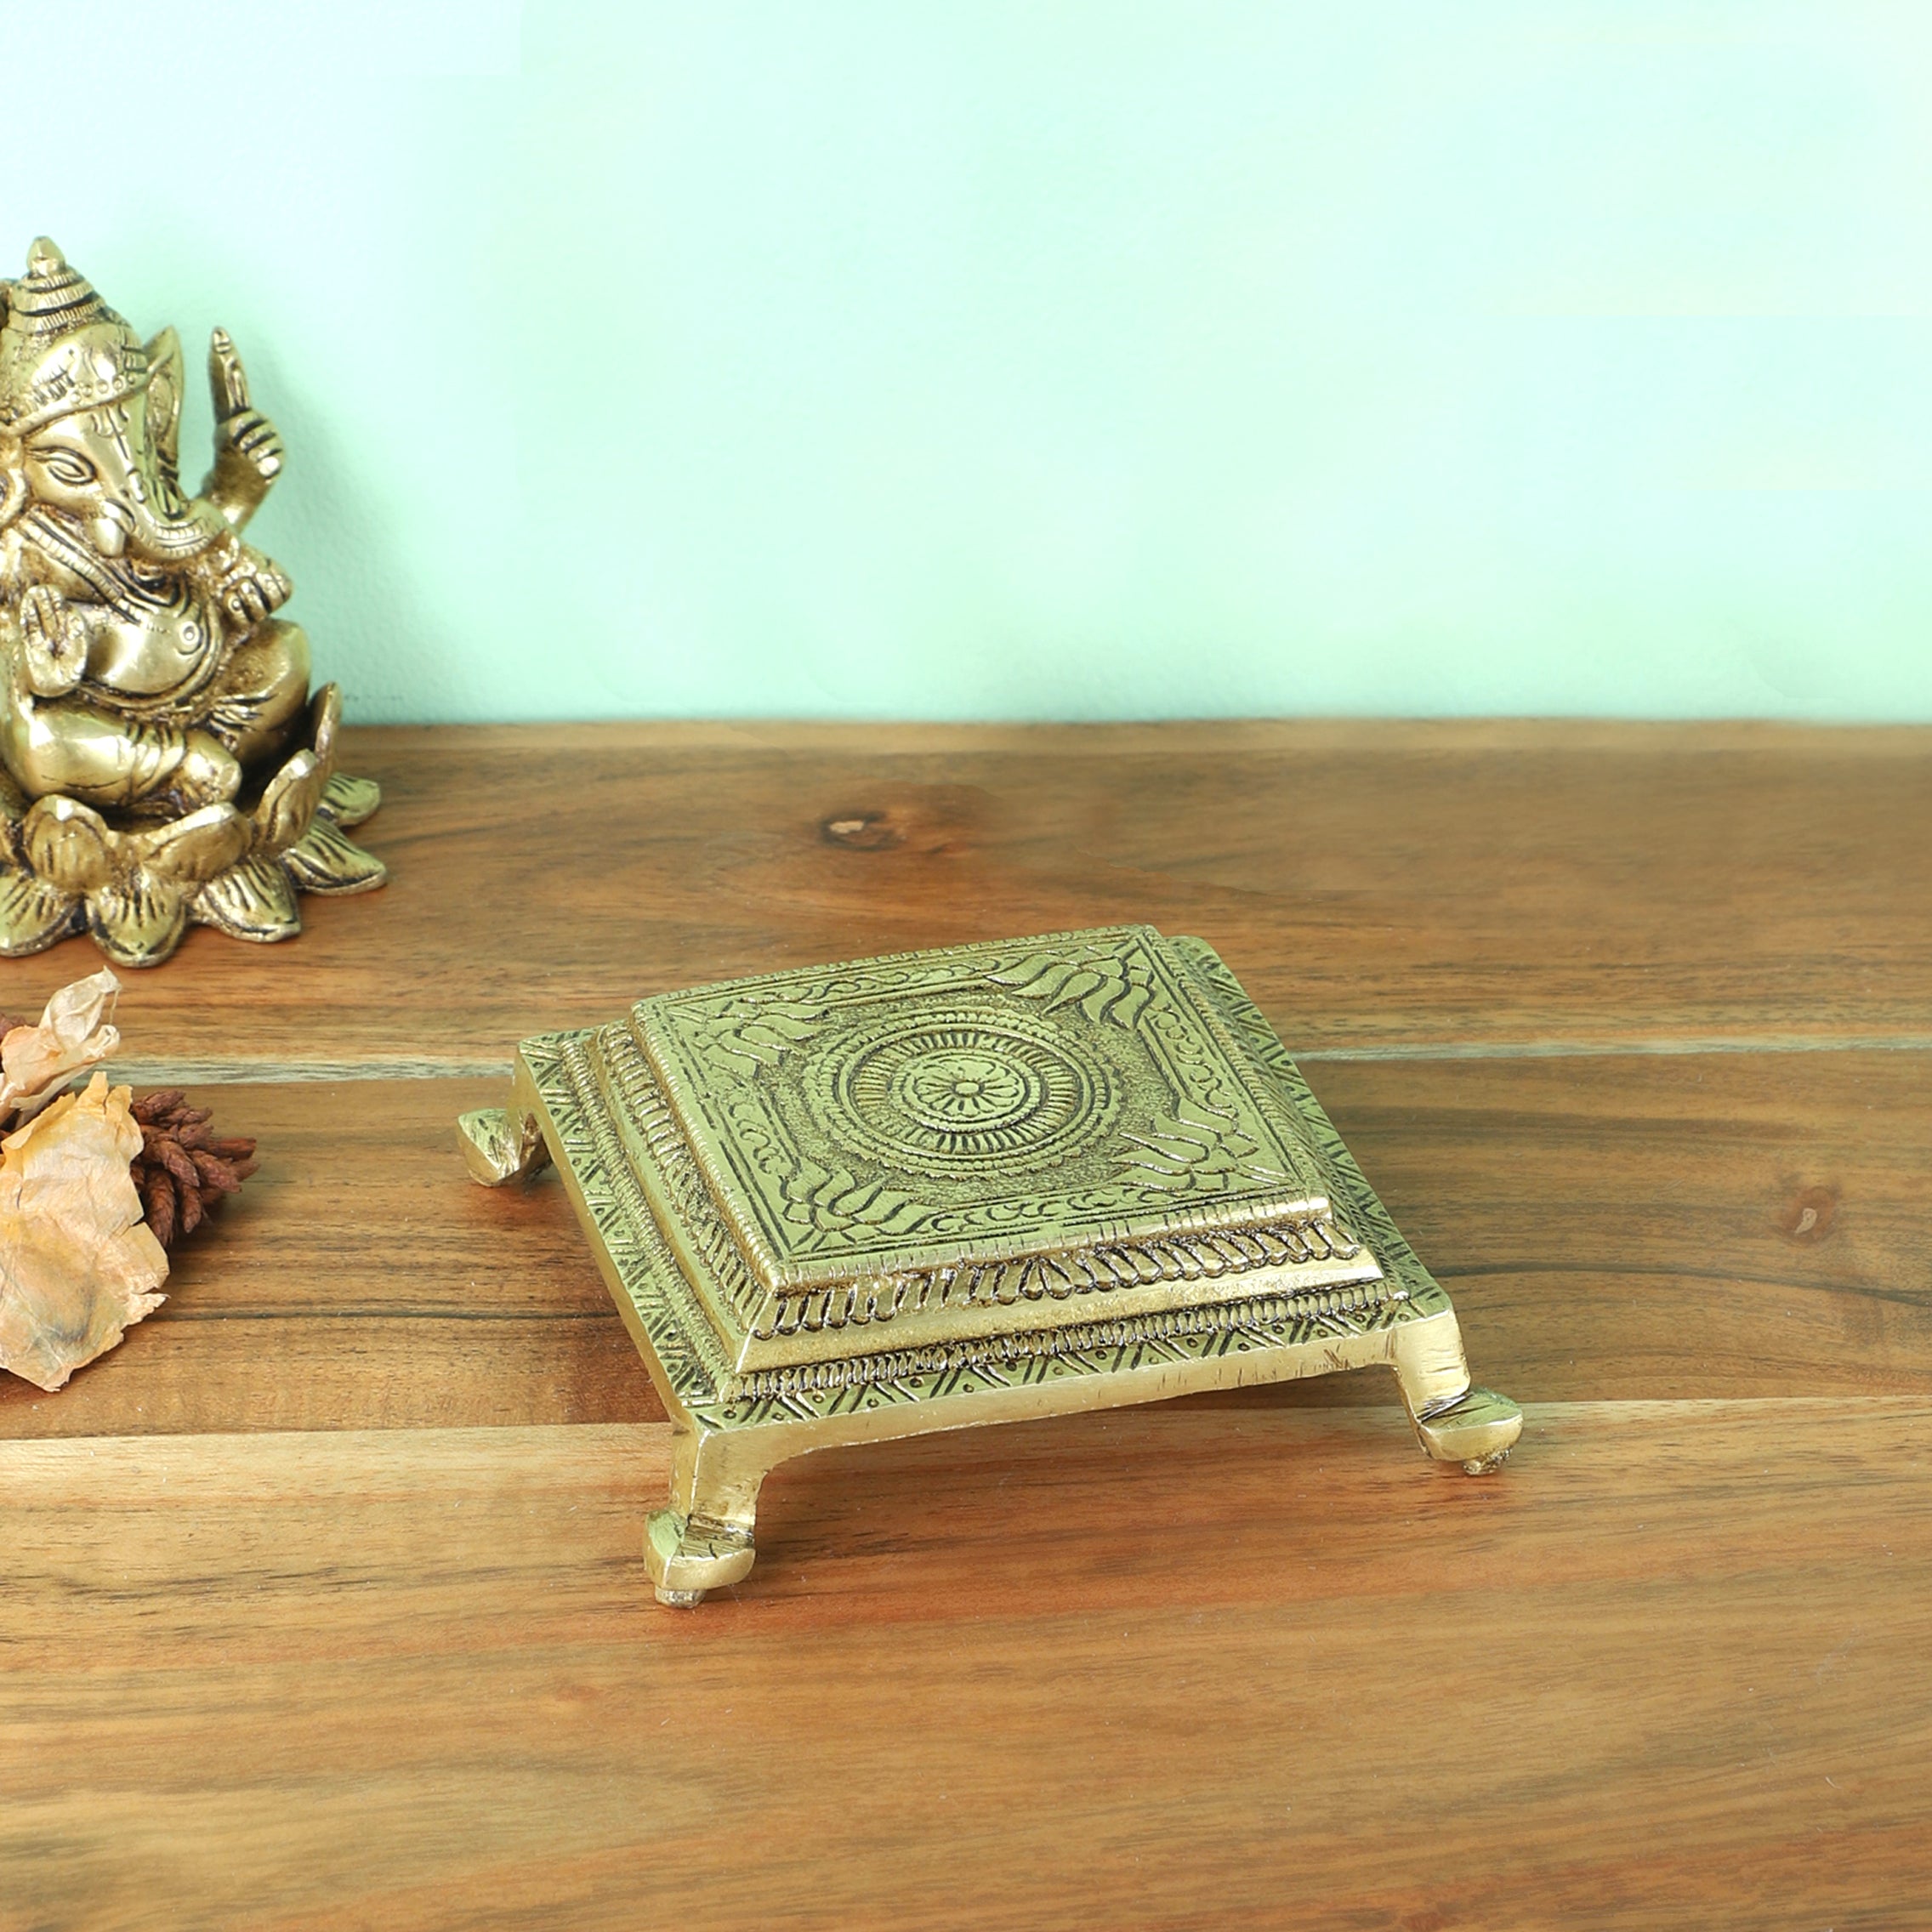 Brass Lotus Engraved 3.5 Inches Pooja Chowki, Chowki for God Idols, Temple Decor